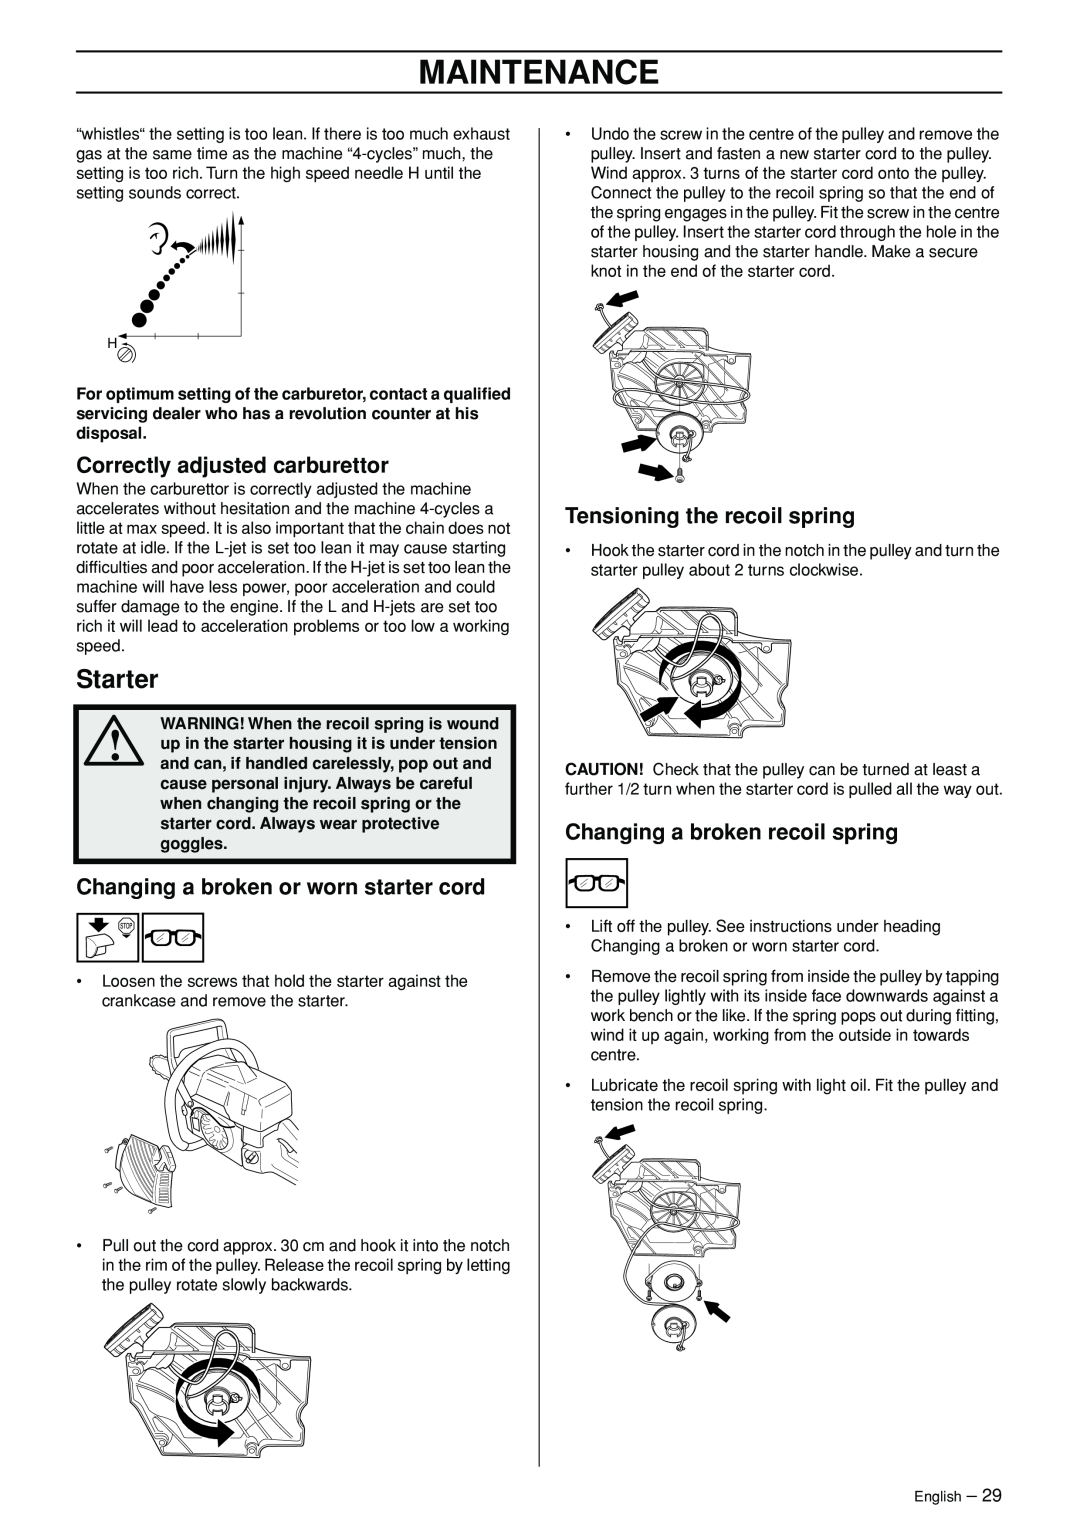 Jonsered CS 2141 EPA II manual Starter, Correctly adjusted carburettor, Changing a broken or worn starter cord, Maintenance 